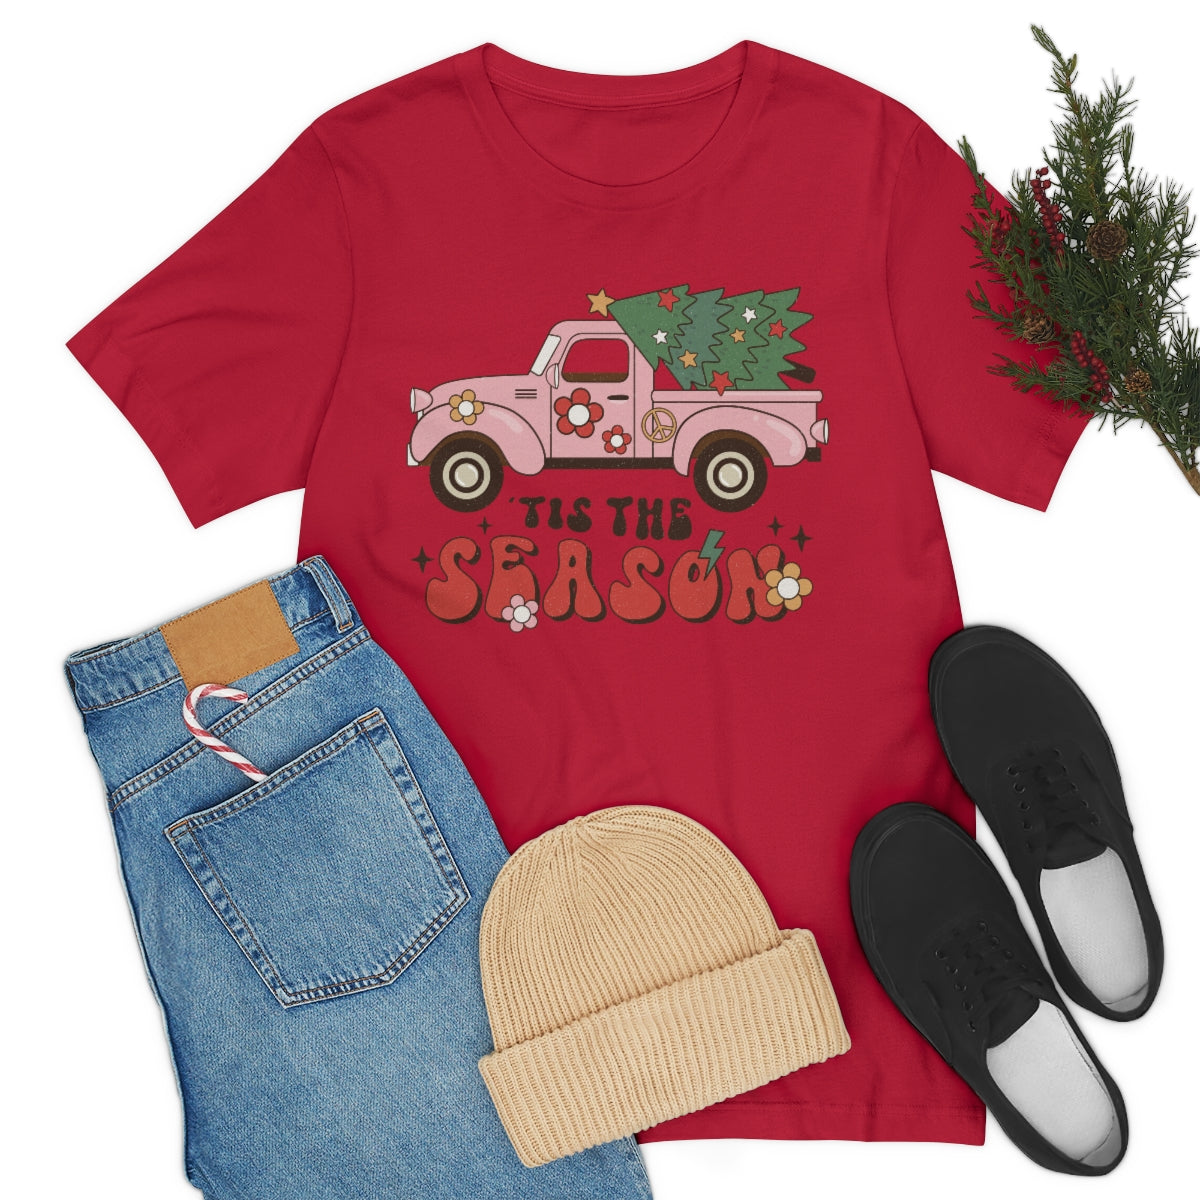 Tis the Season Pink Truck With Cut Christmas Tree Shirt